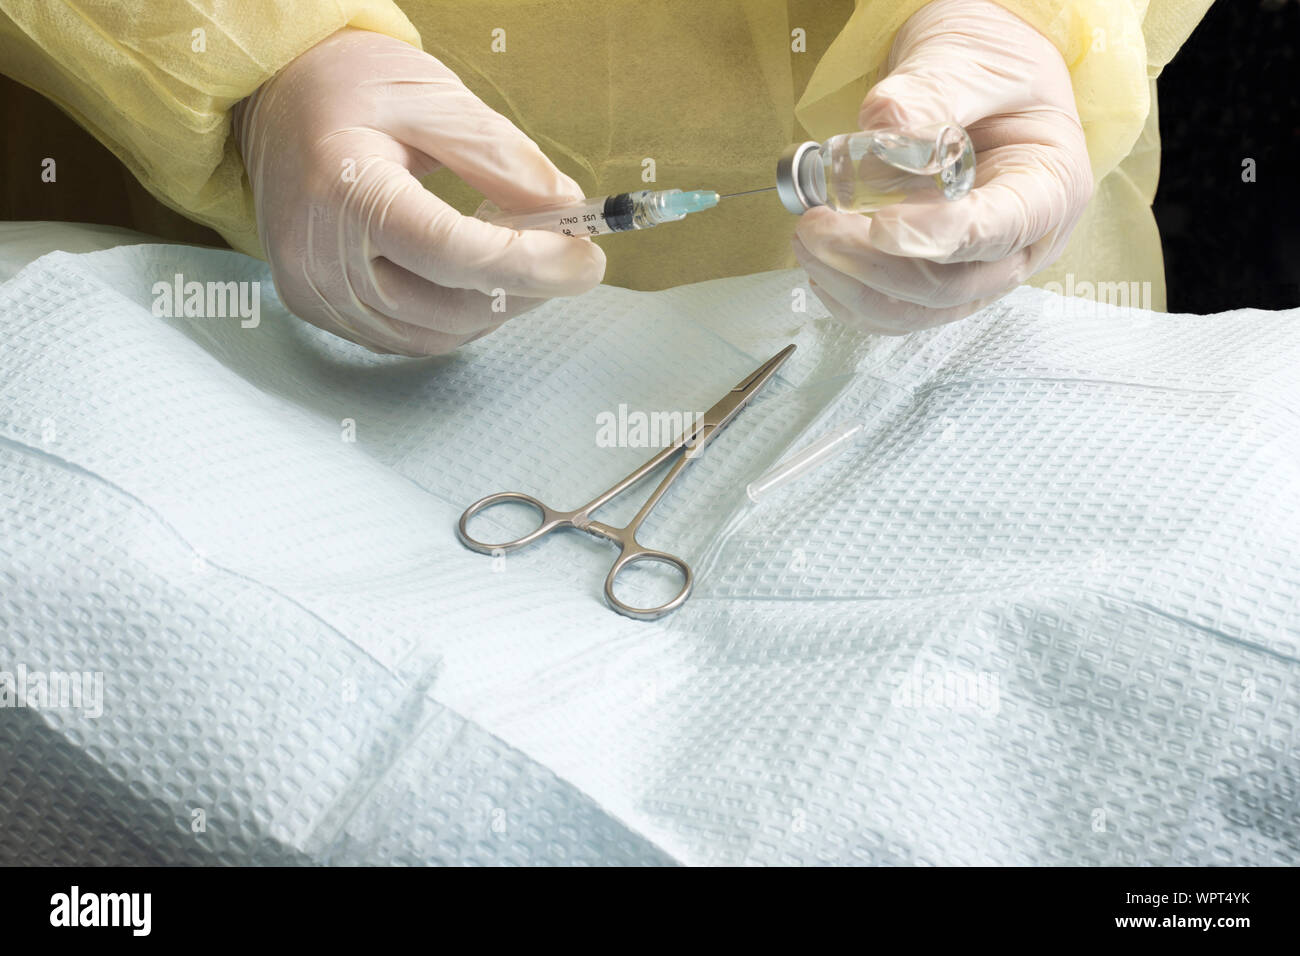 Surgeon draws anestetic into syringe with hemostats on sterile drape below. Stock Photo